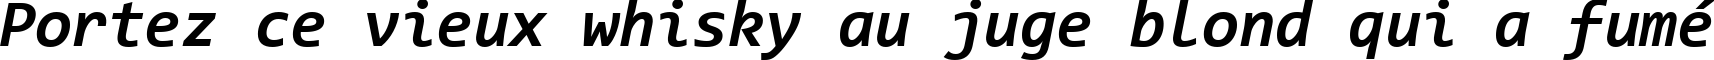 Пример написания шрифтом Consolas Bold Italic текста на французском